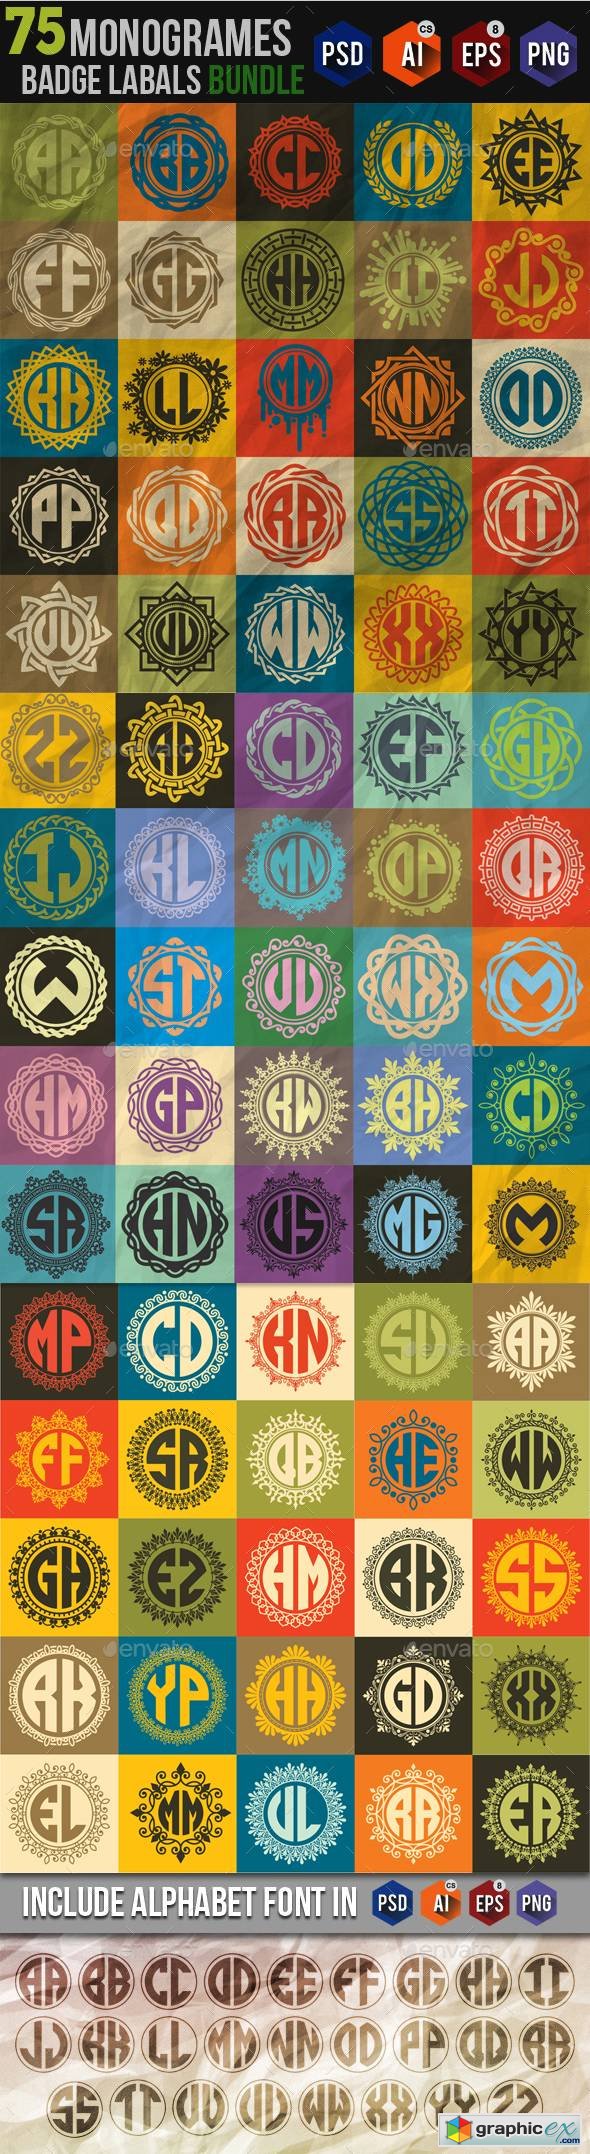 75 Monogrames Badge Labals With Alphabet Bundle